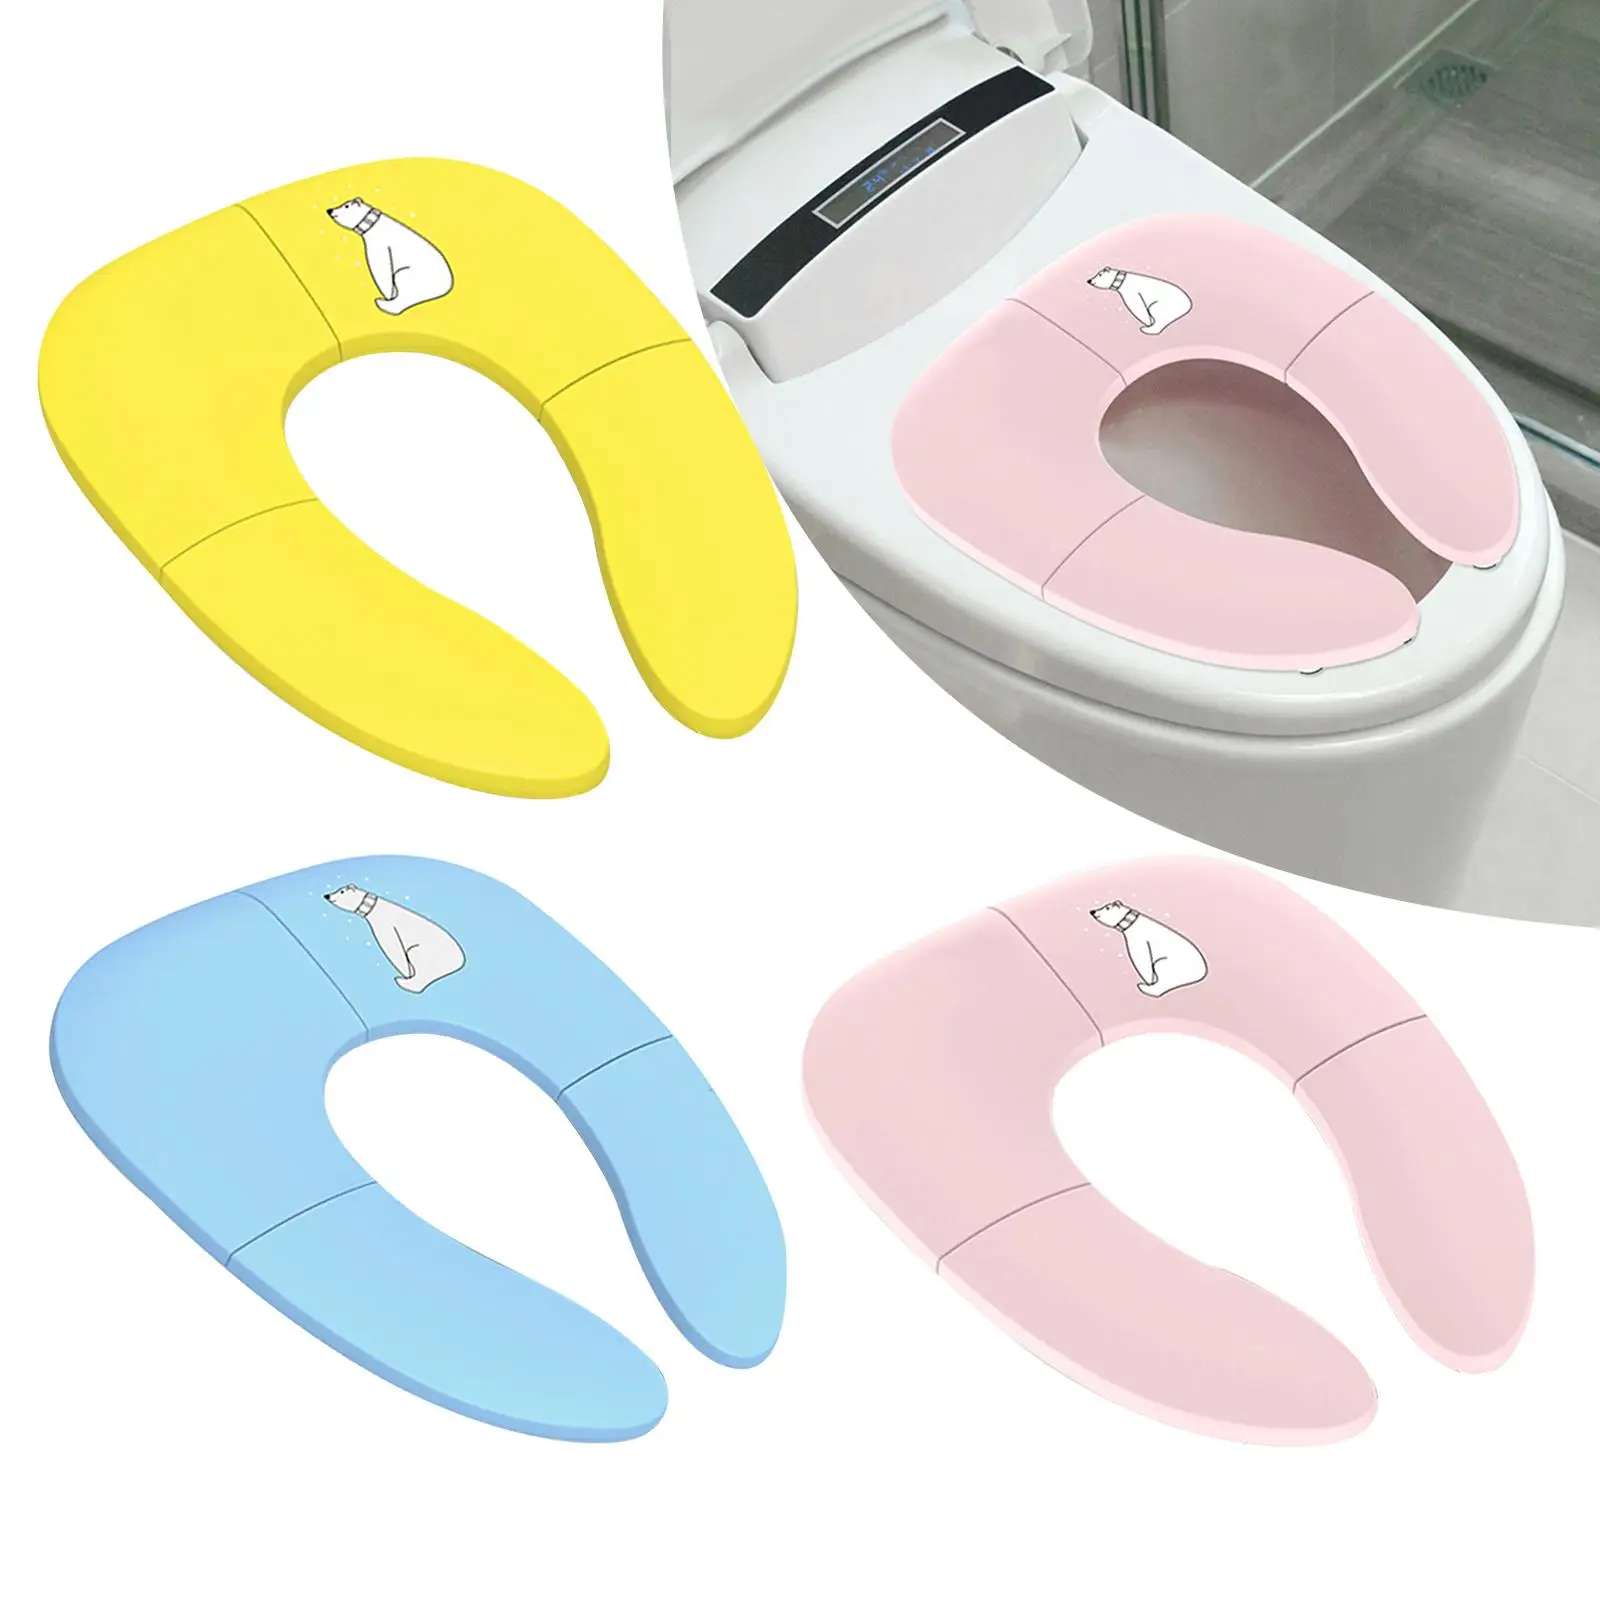 Folding Toilet Cushion Reusable Non Slip Portable for Home Use Toddler Child